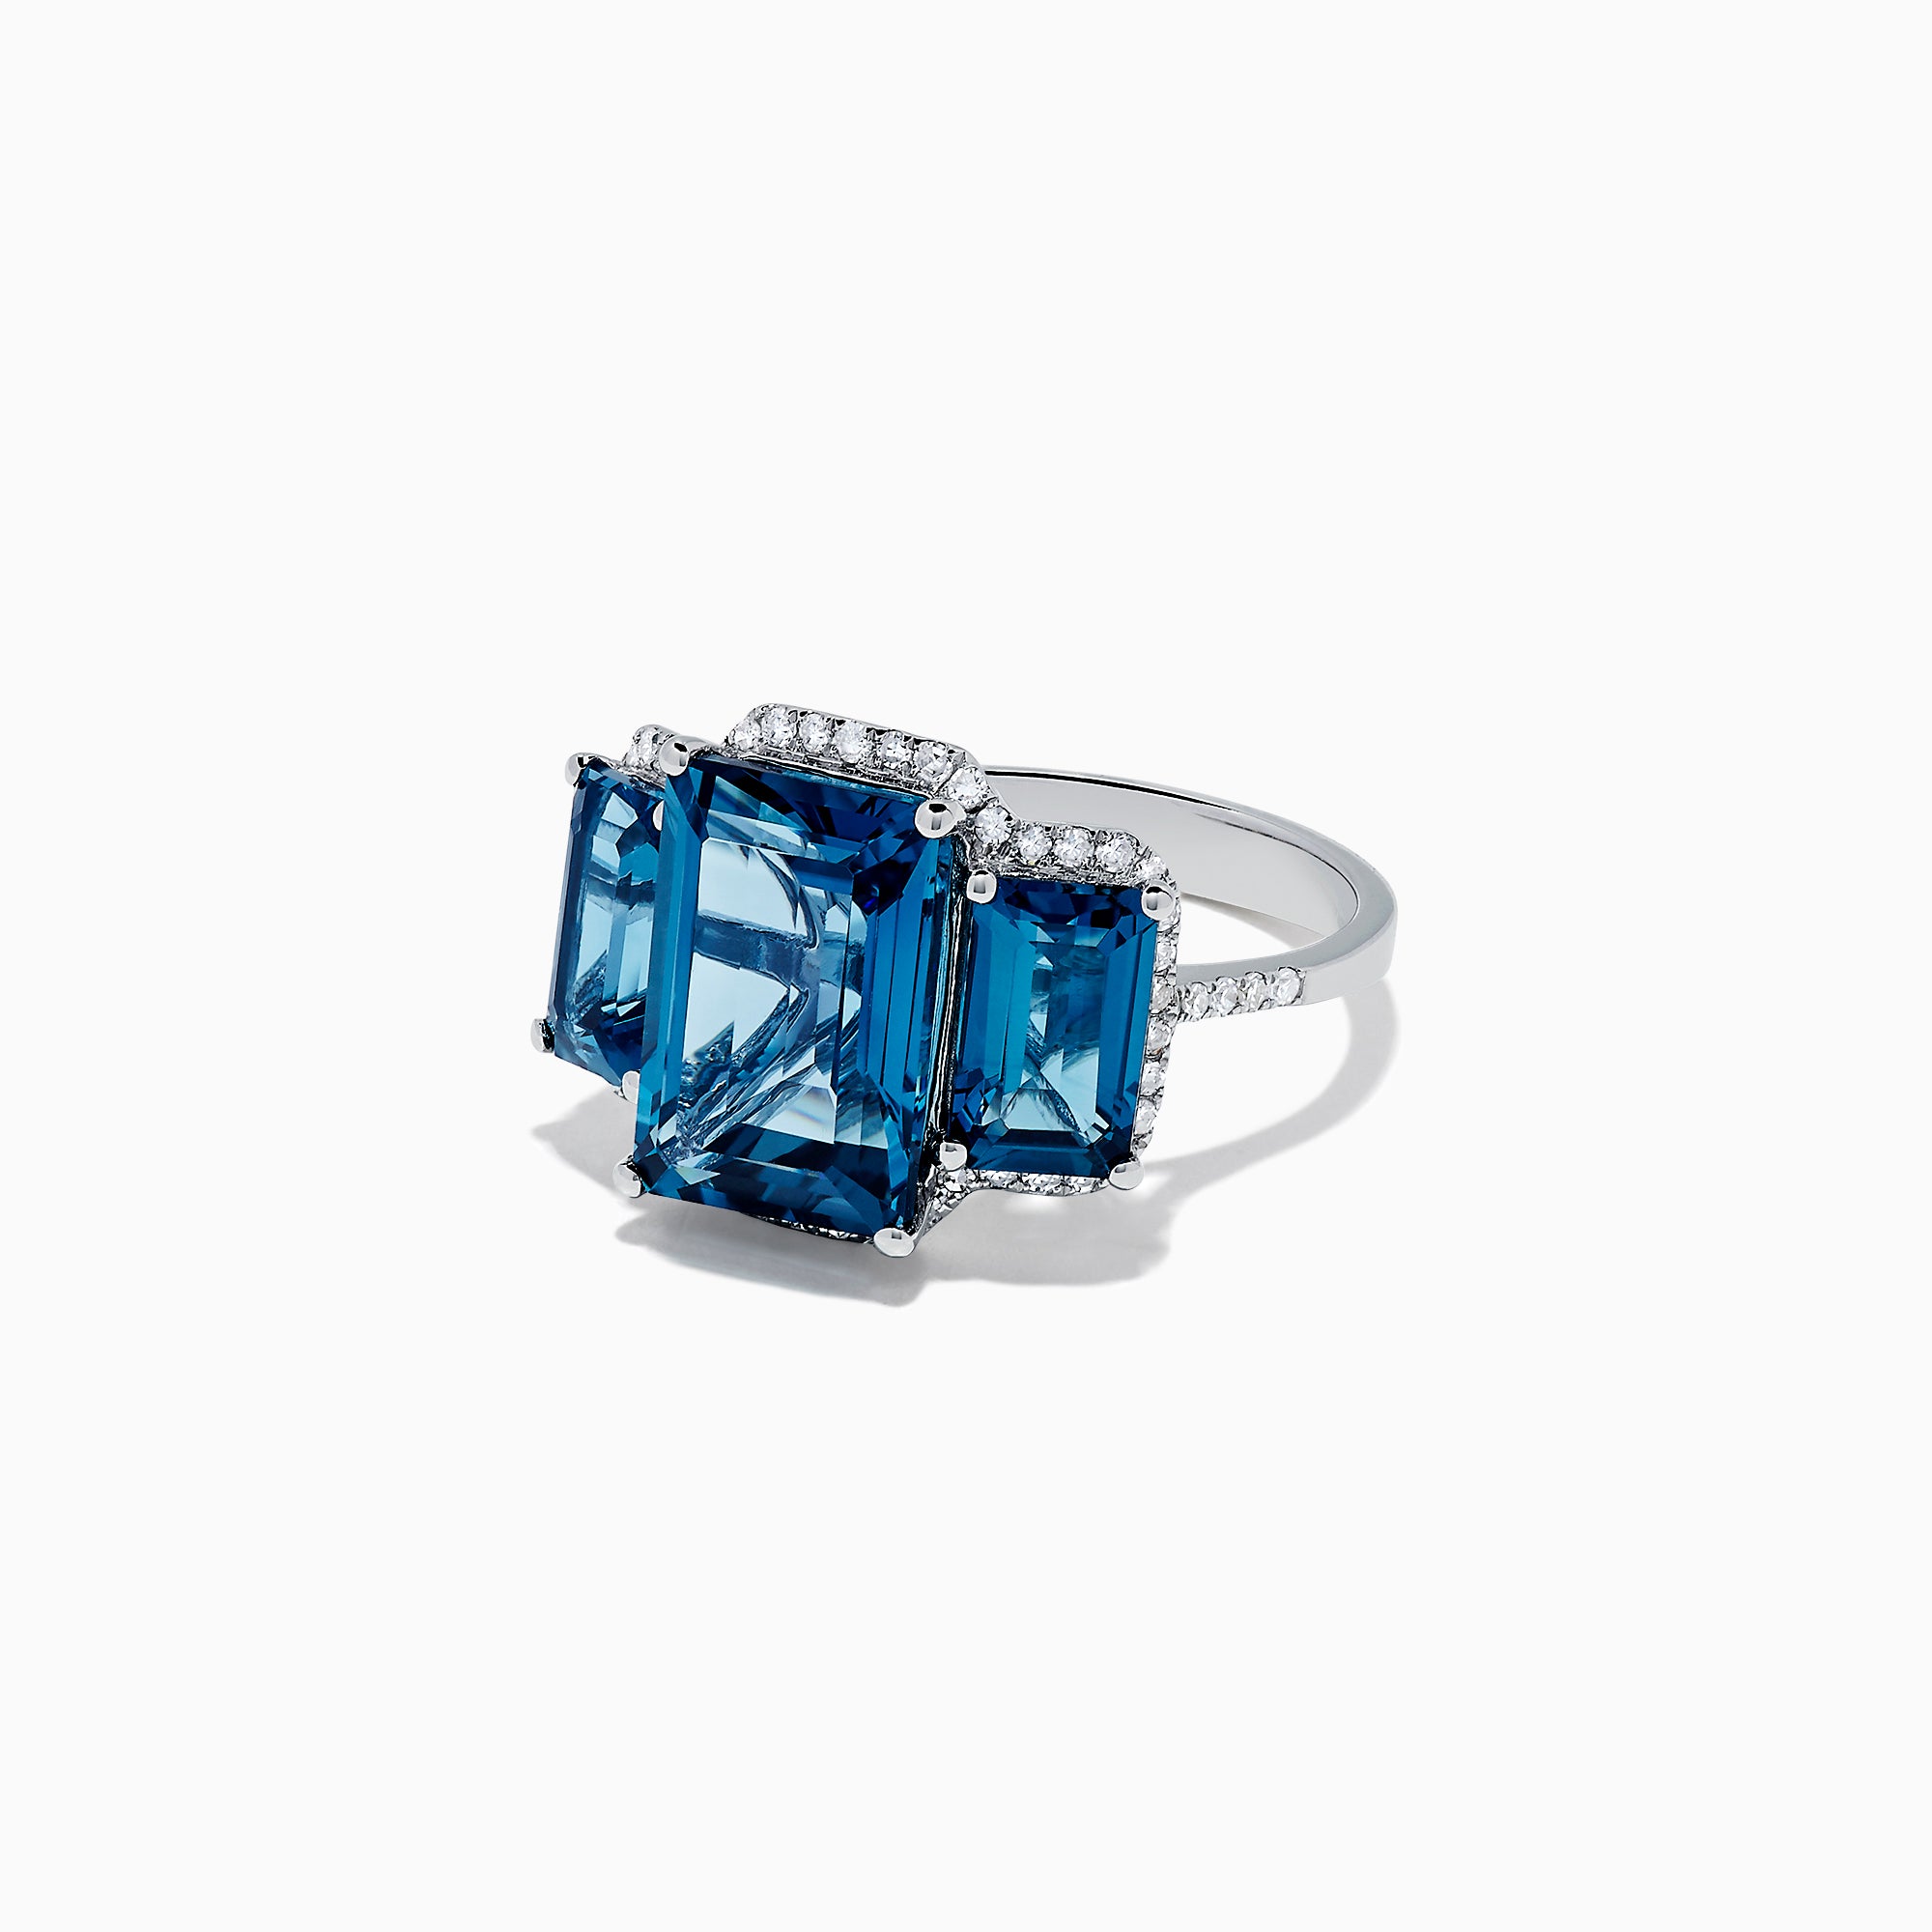 Effy Ocean Bleu 14K White Gold London Blue Topaz and Diamond Ring, 8.72 TCW